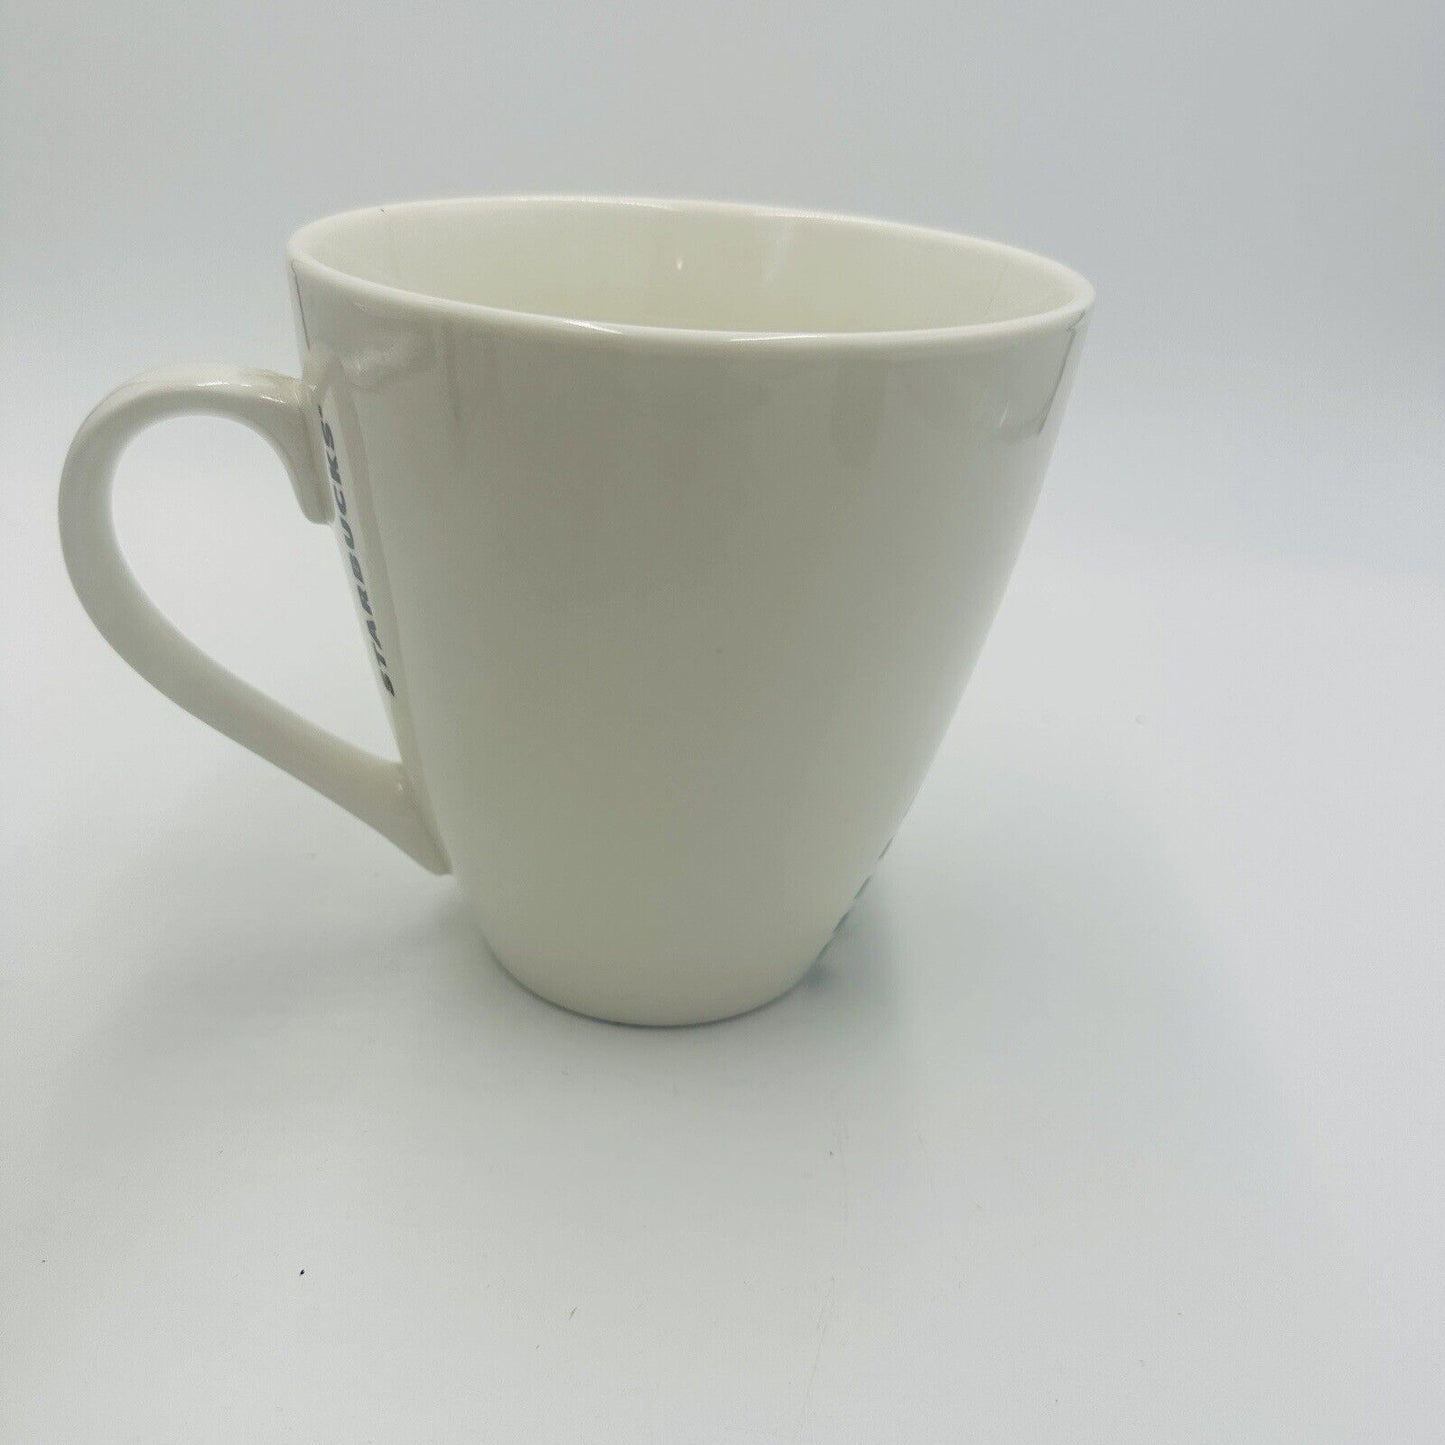 Starbucks 45 Oz Ceramic Coffee Mug Cup with Mermaid Logo 6"Wide X 6"Tall